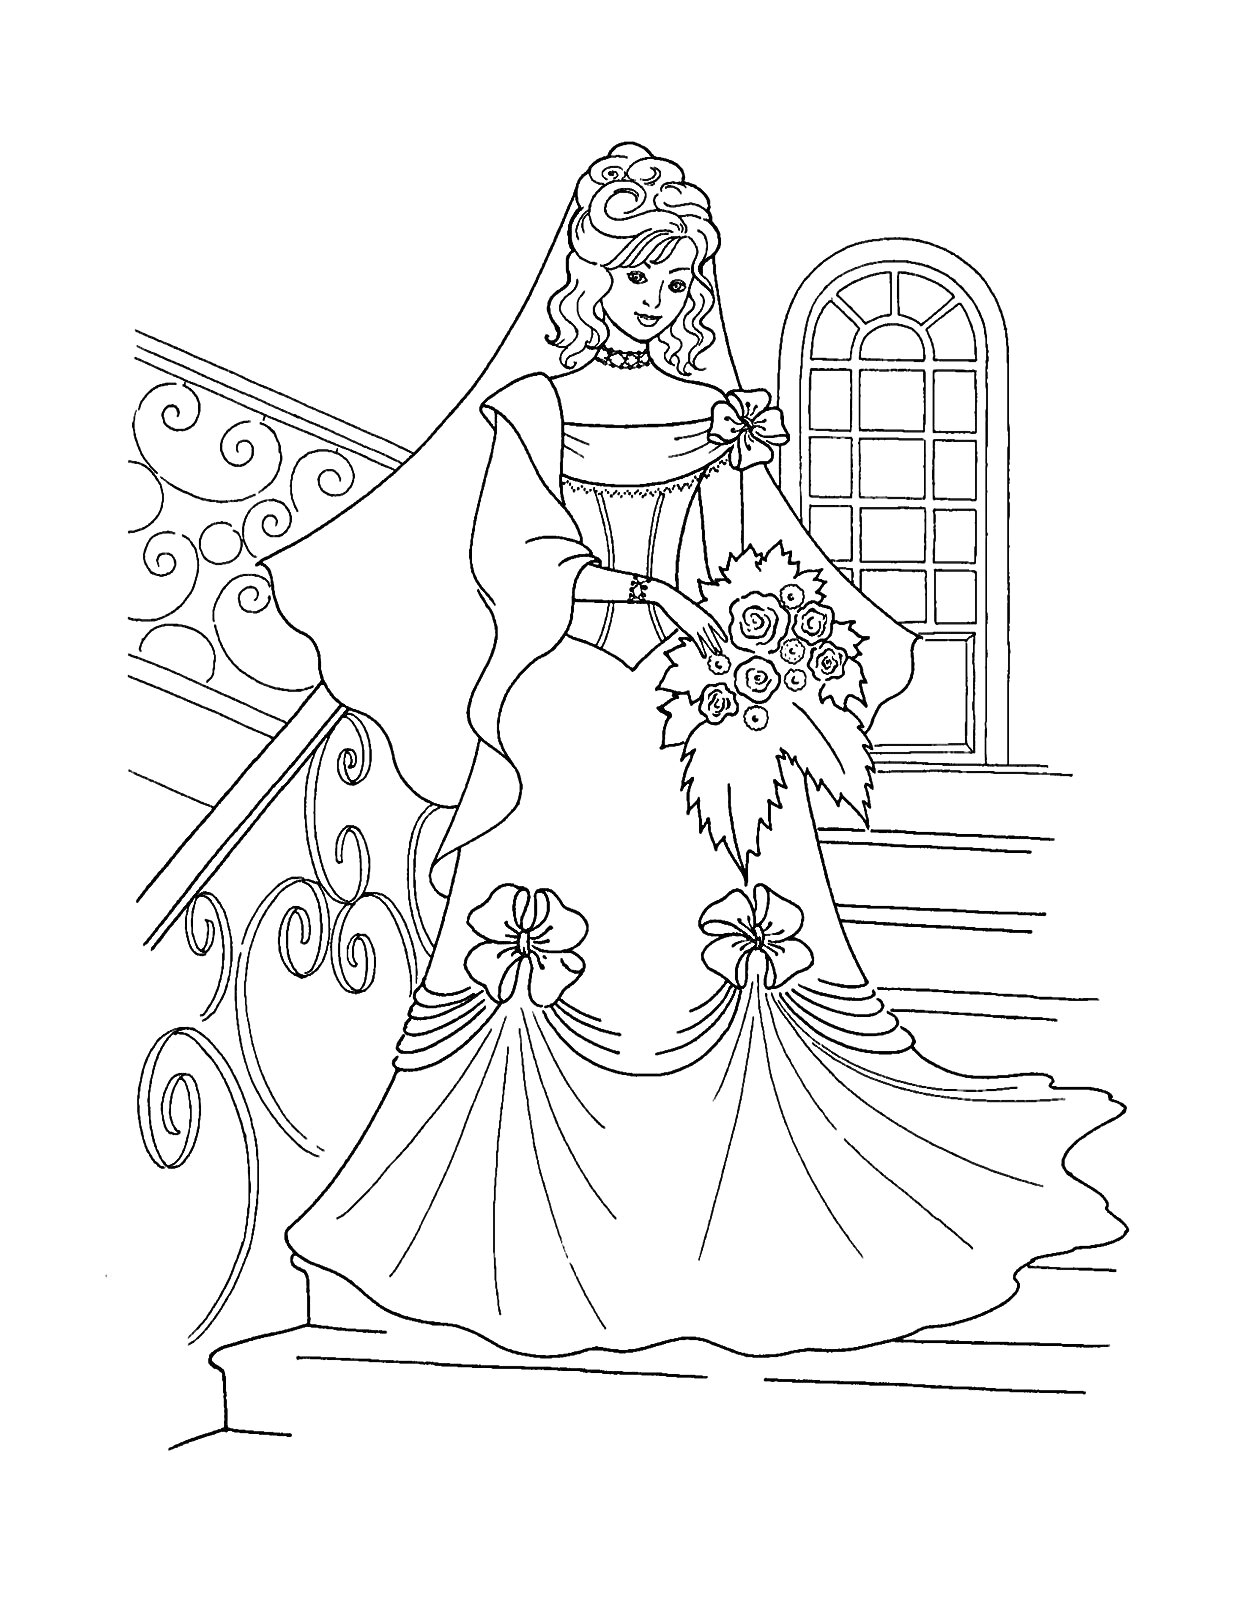 Невеста на лестнице с букетом цветов возле окна